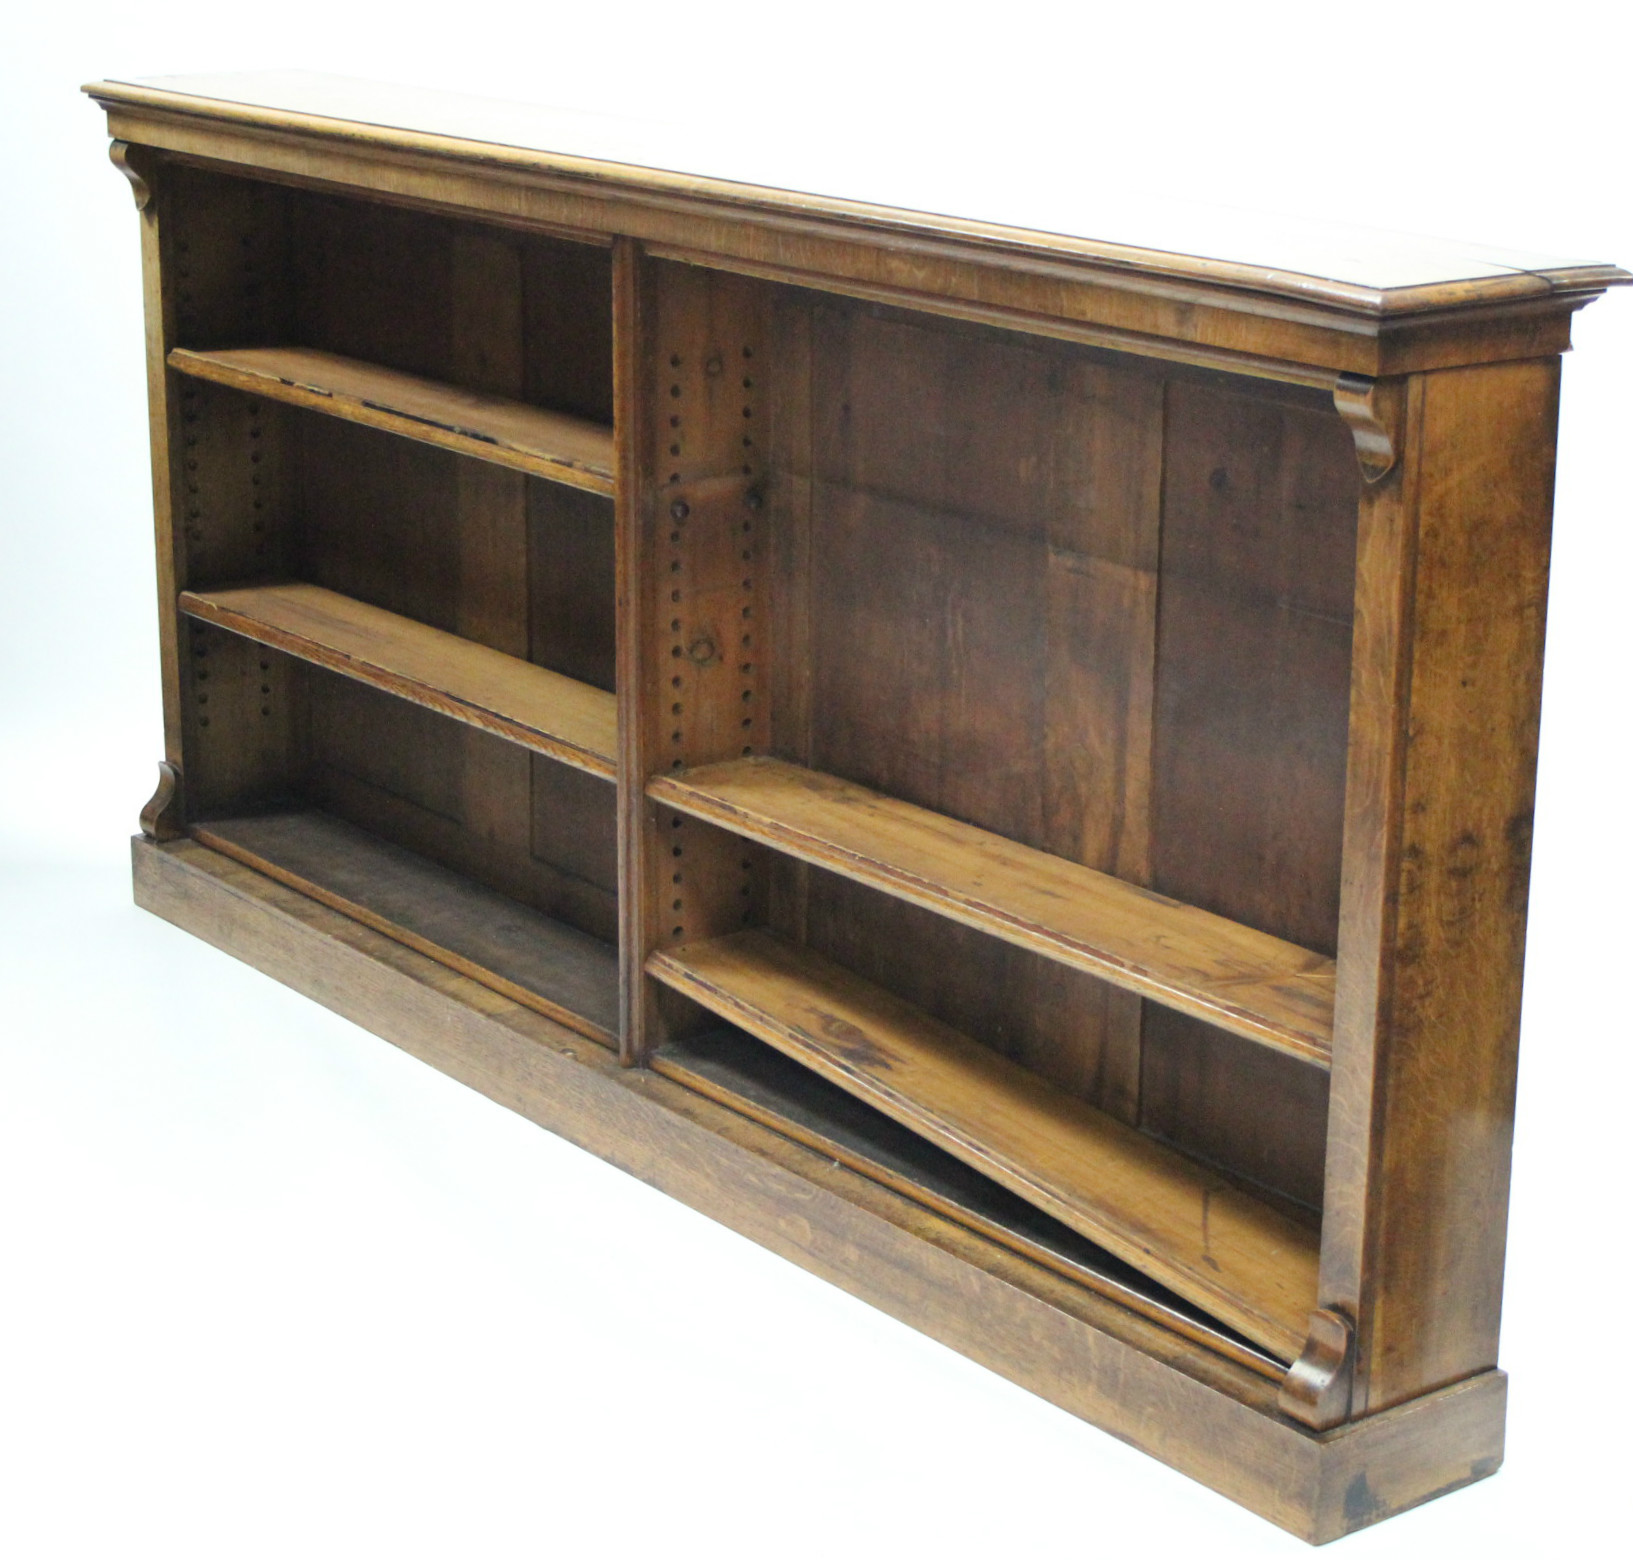 An early 19th century light oak standing open bookcase, having four adjustable shelves, plain scroll